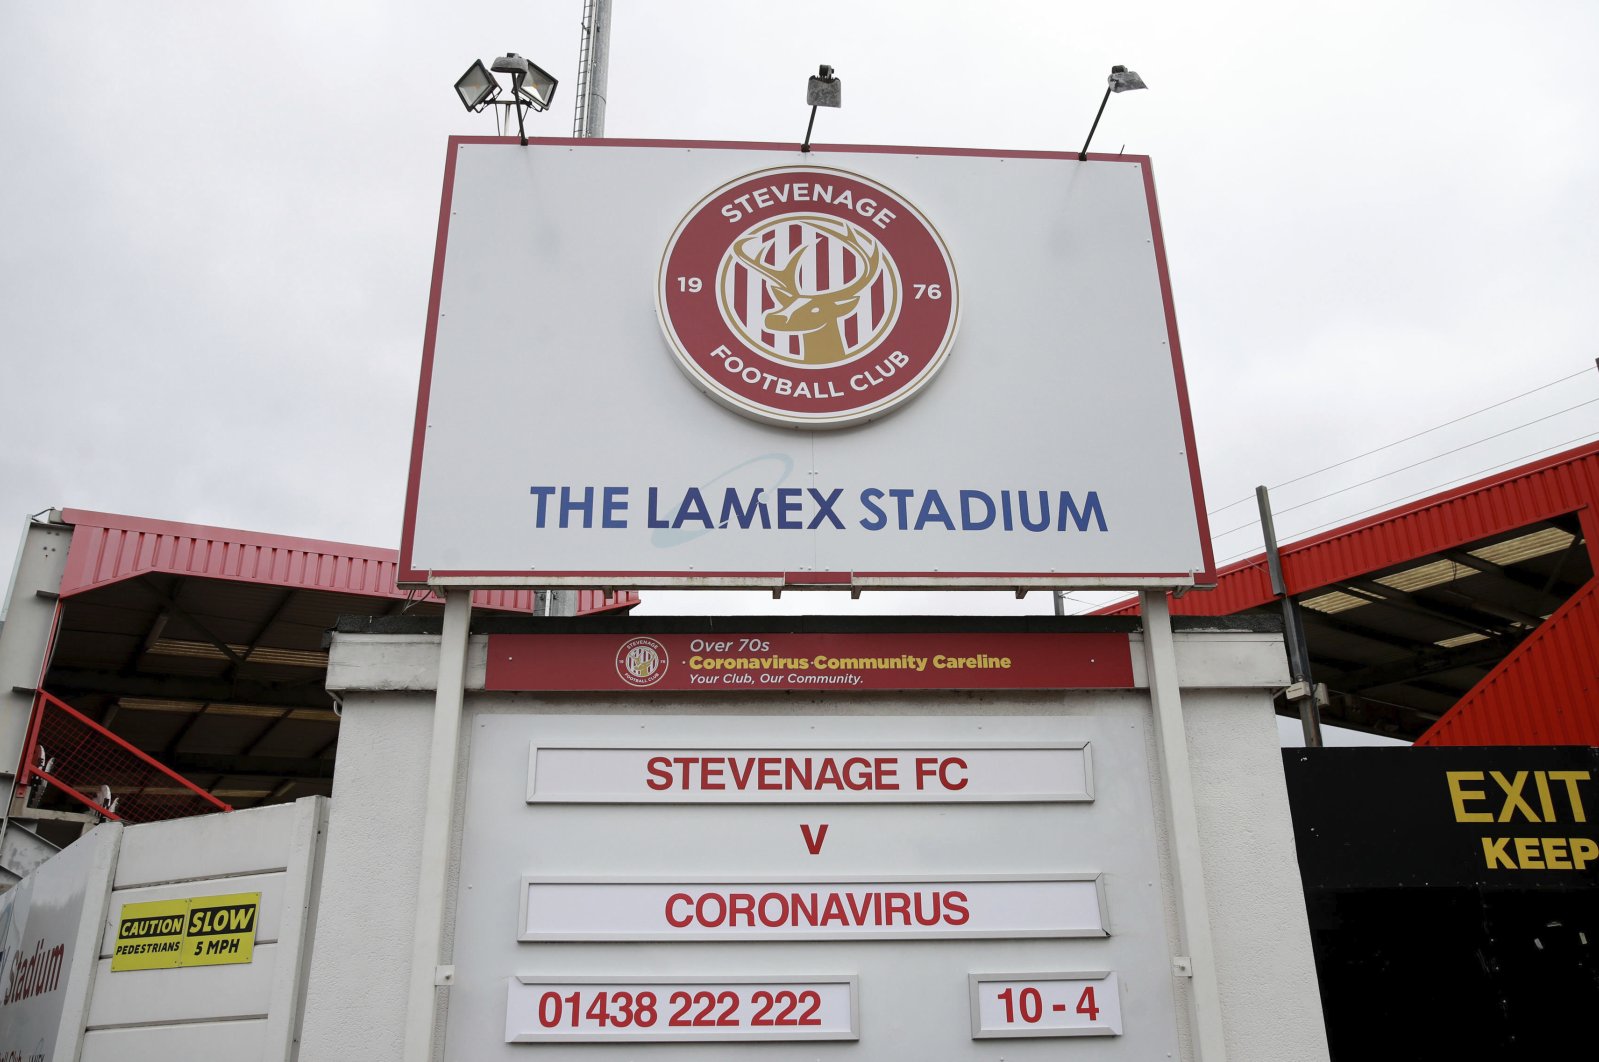 The Lamex Stadium, home of Stevenage football club, where the upcoming fixture board shows Stevenage FC v Coronavirus, Sunday, March 29, 2020. (AP Photo) 